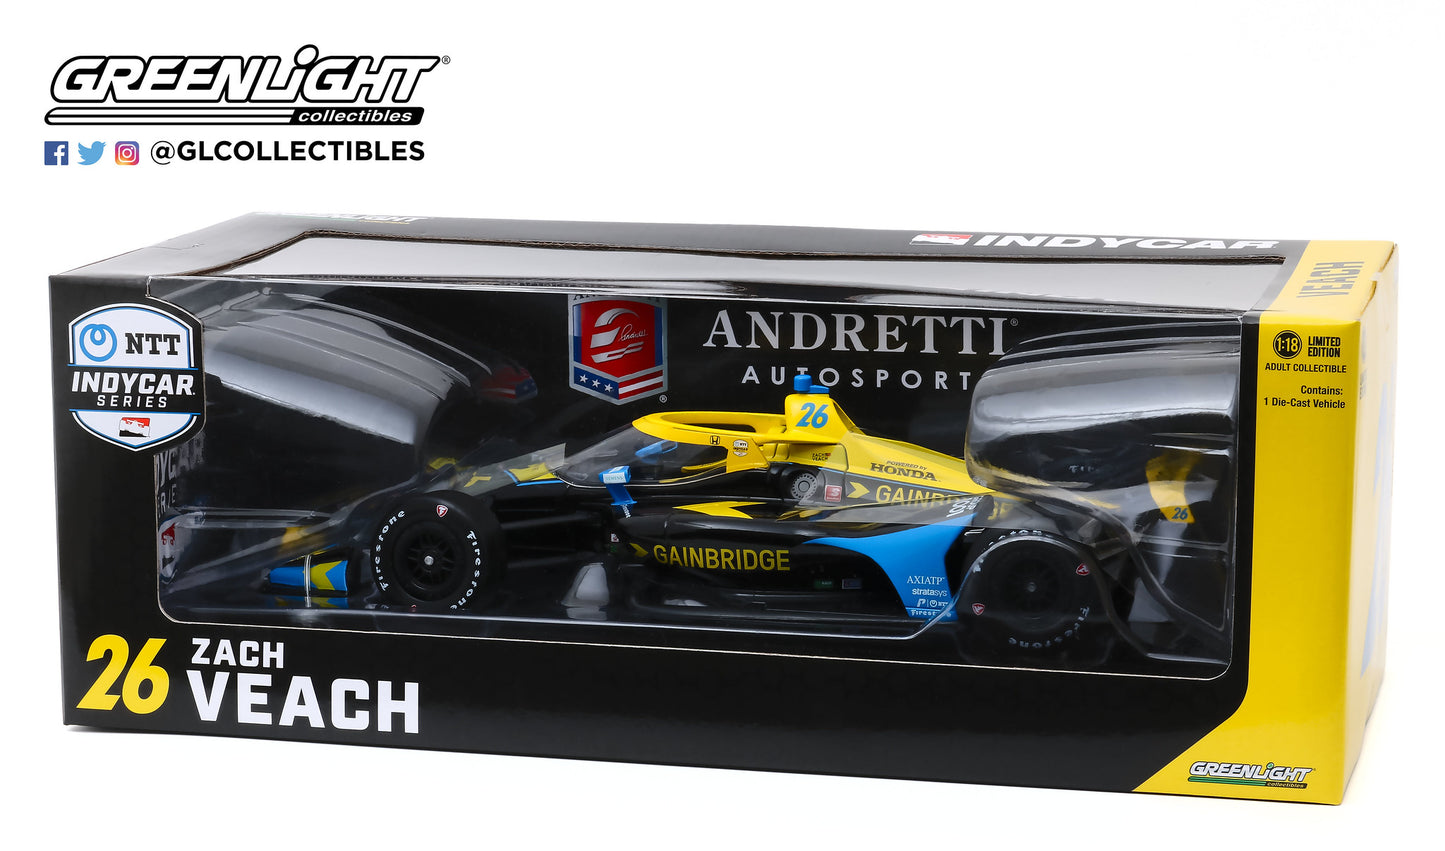 GreenLight 1:18 2020 NTT IndyCar Series - #26 Zach Veach / Andretti Autosport, Gainbridge 11076